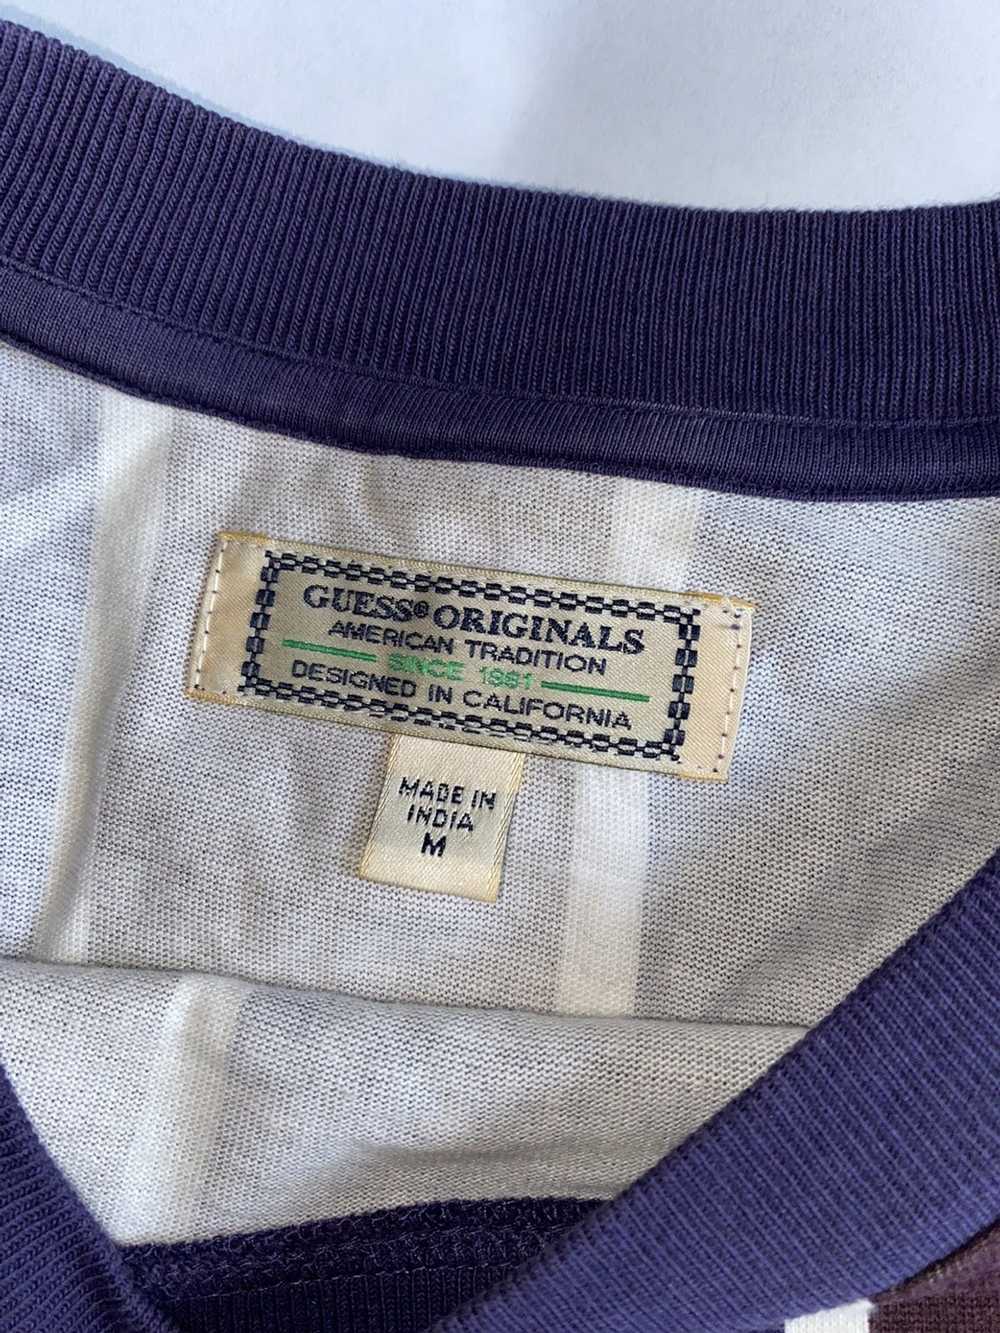 Guess Guess Originals Long Sleeve Shirt Vintage S… - image 2